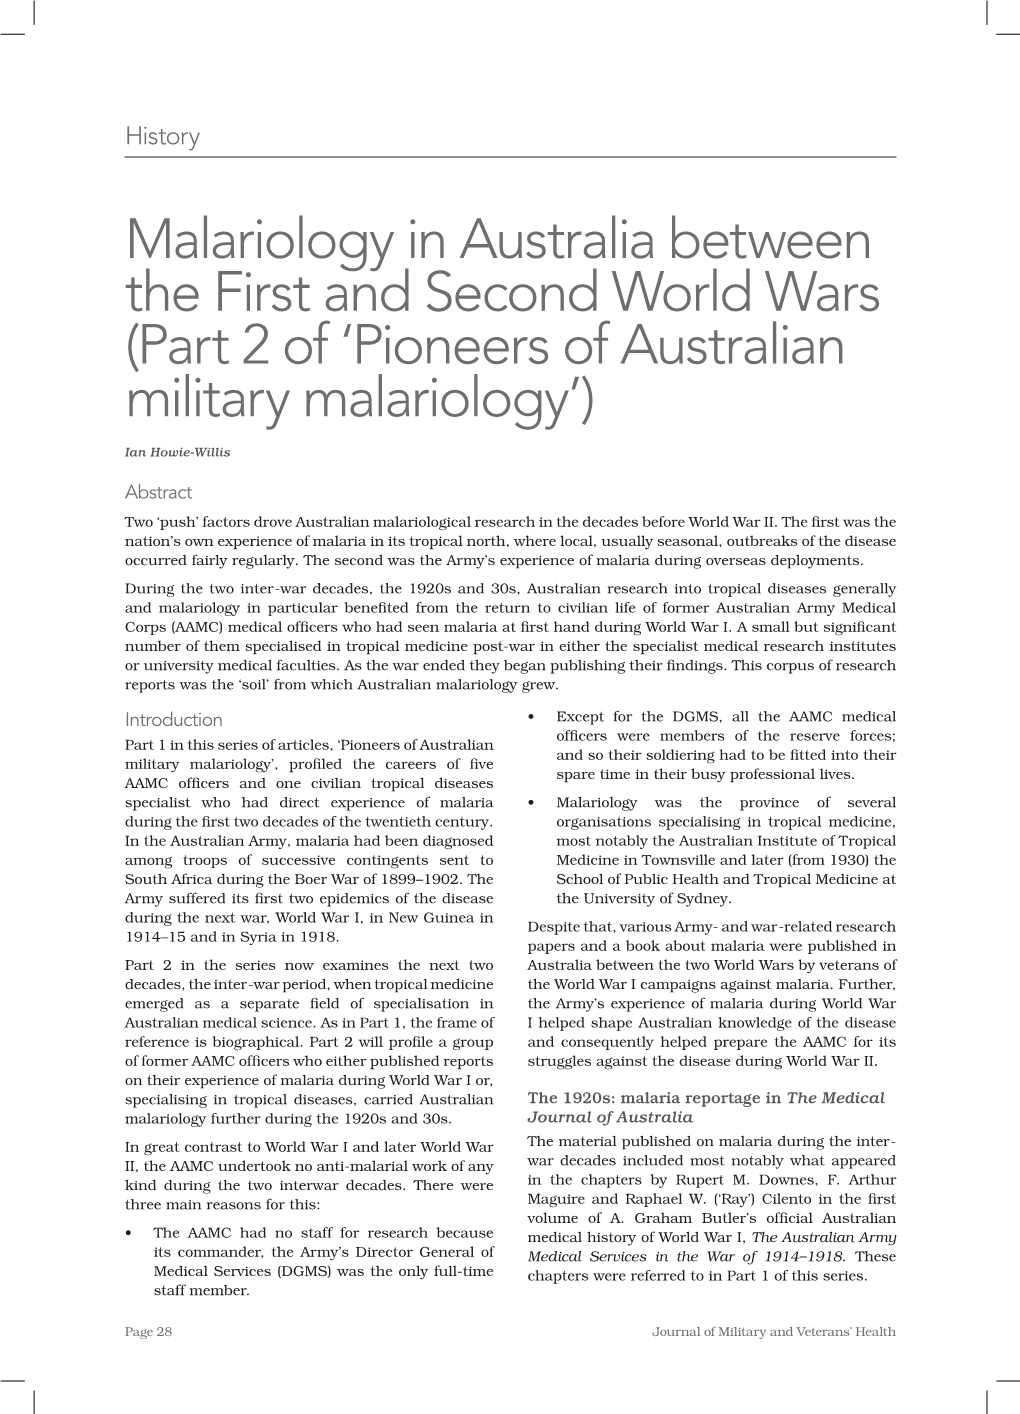 Part 2 of 'Pioneers of Australian Military Malariology'